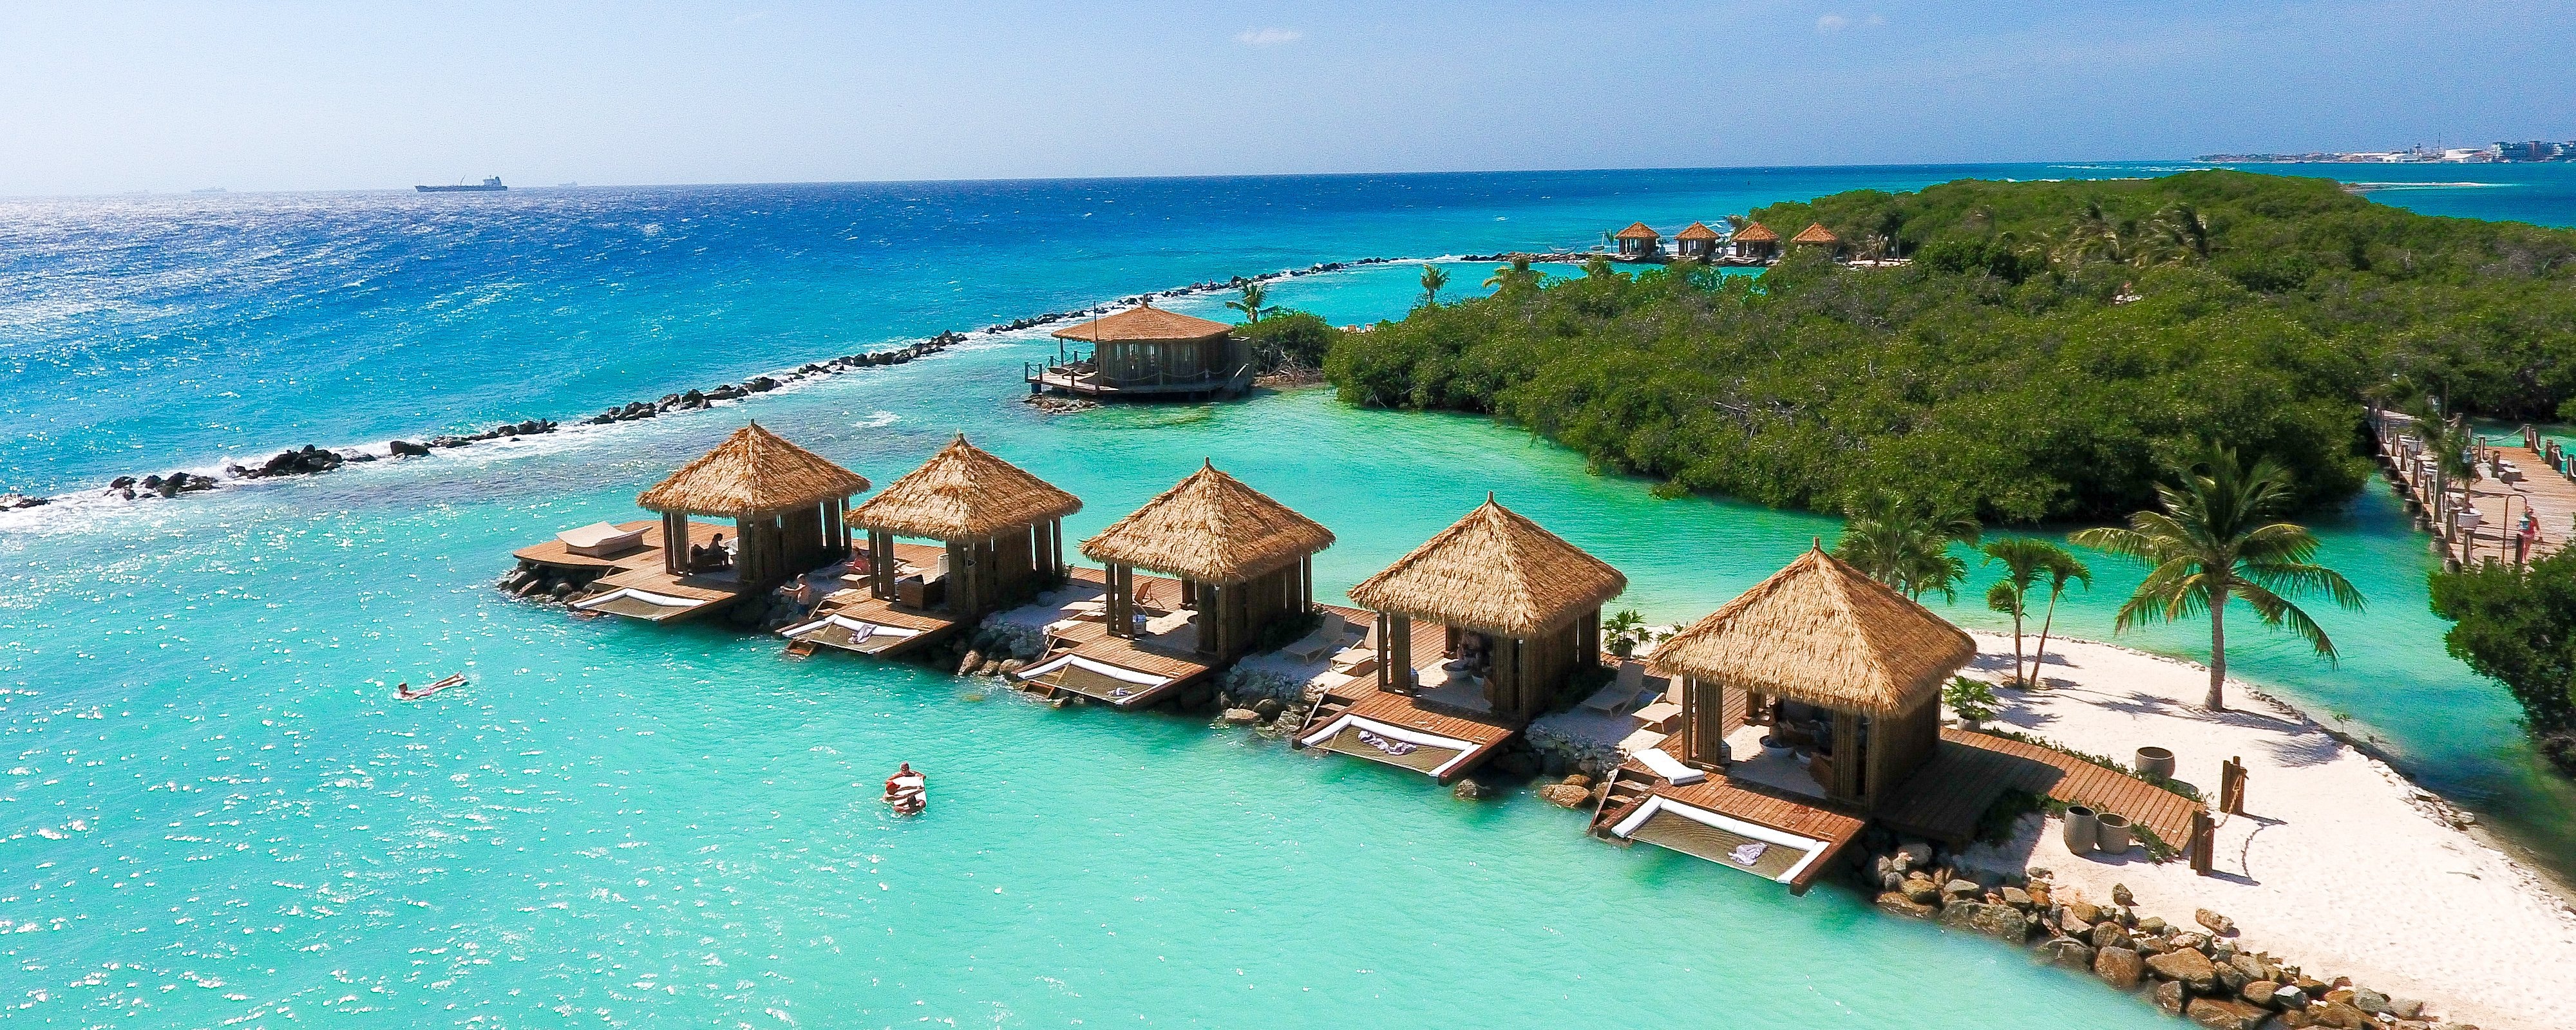 Image for Renaissance Wind Creek Aruba Resort, a Marriott hotel.